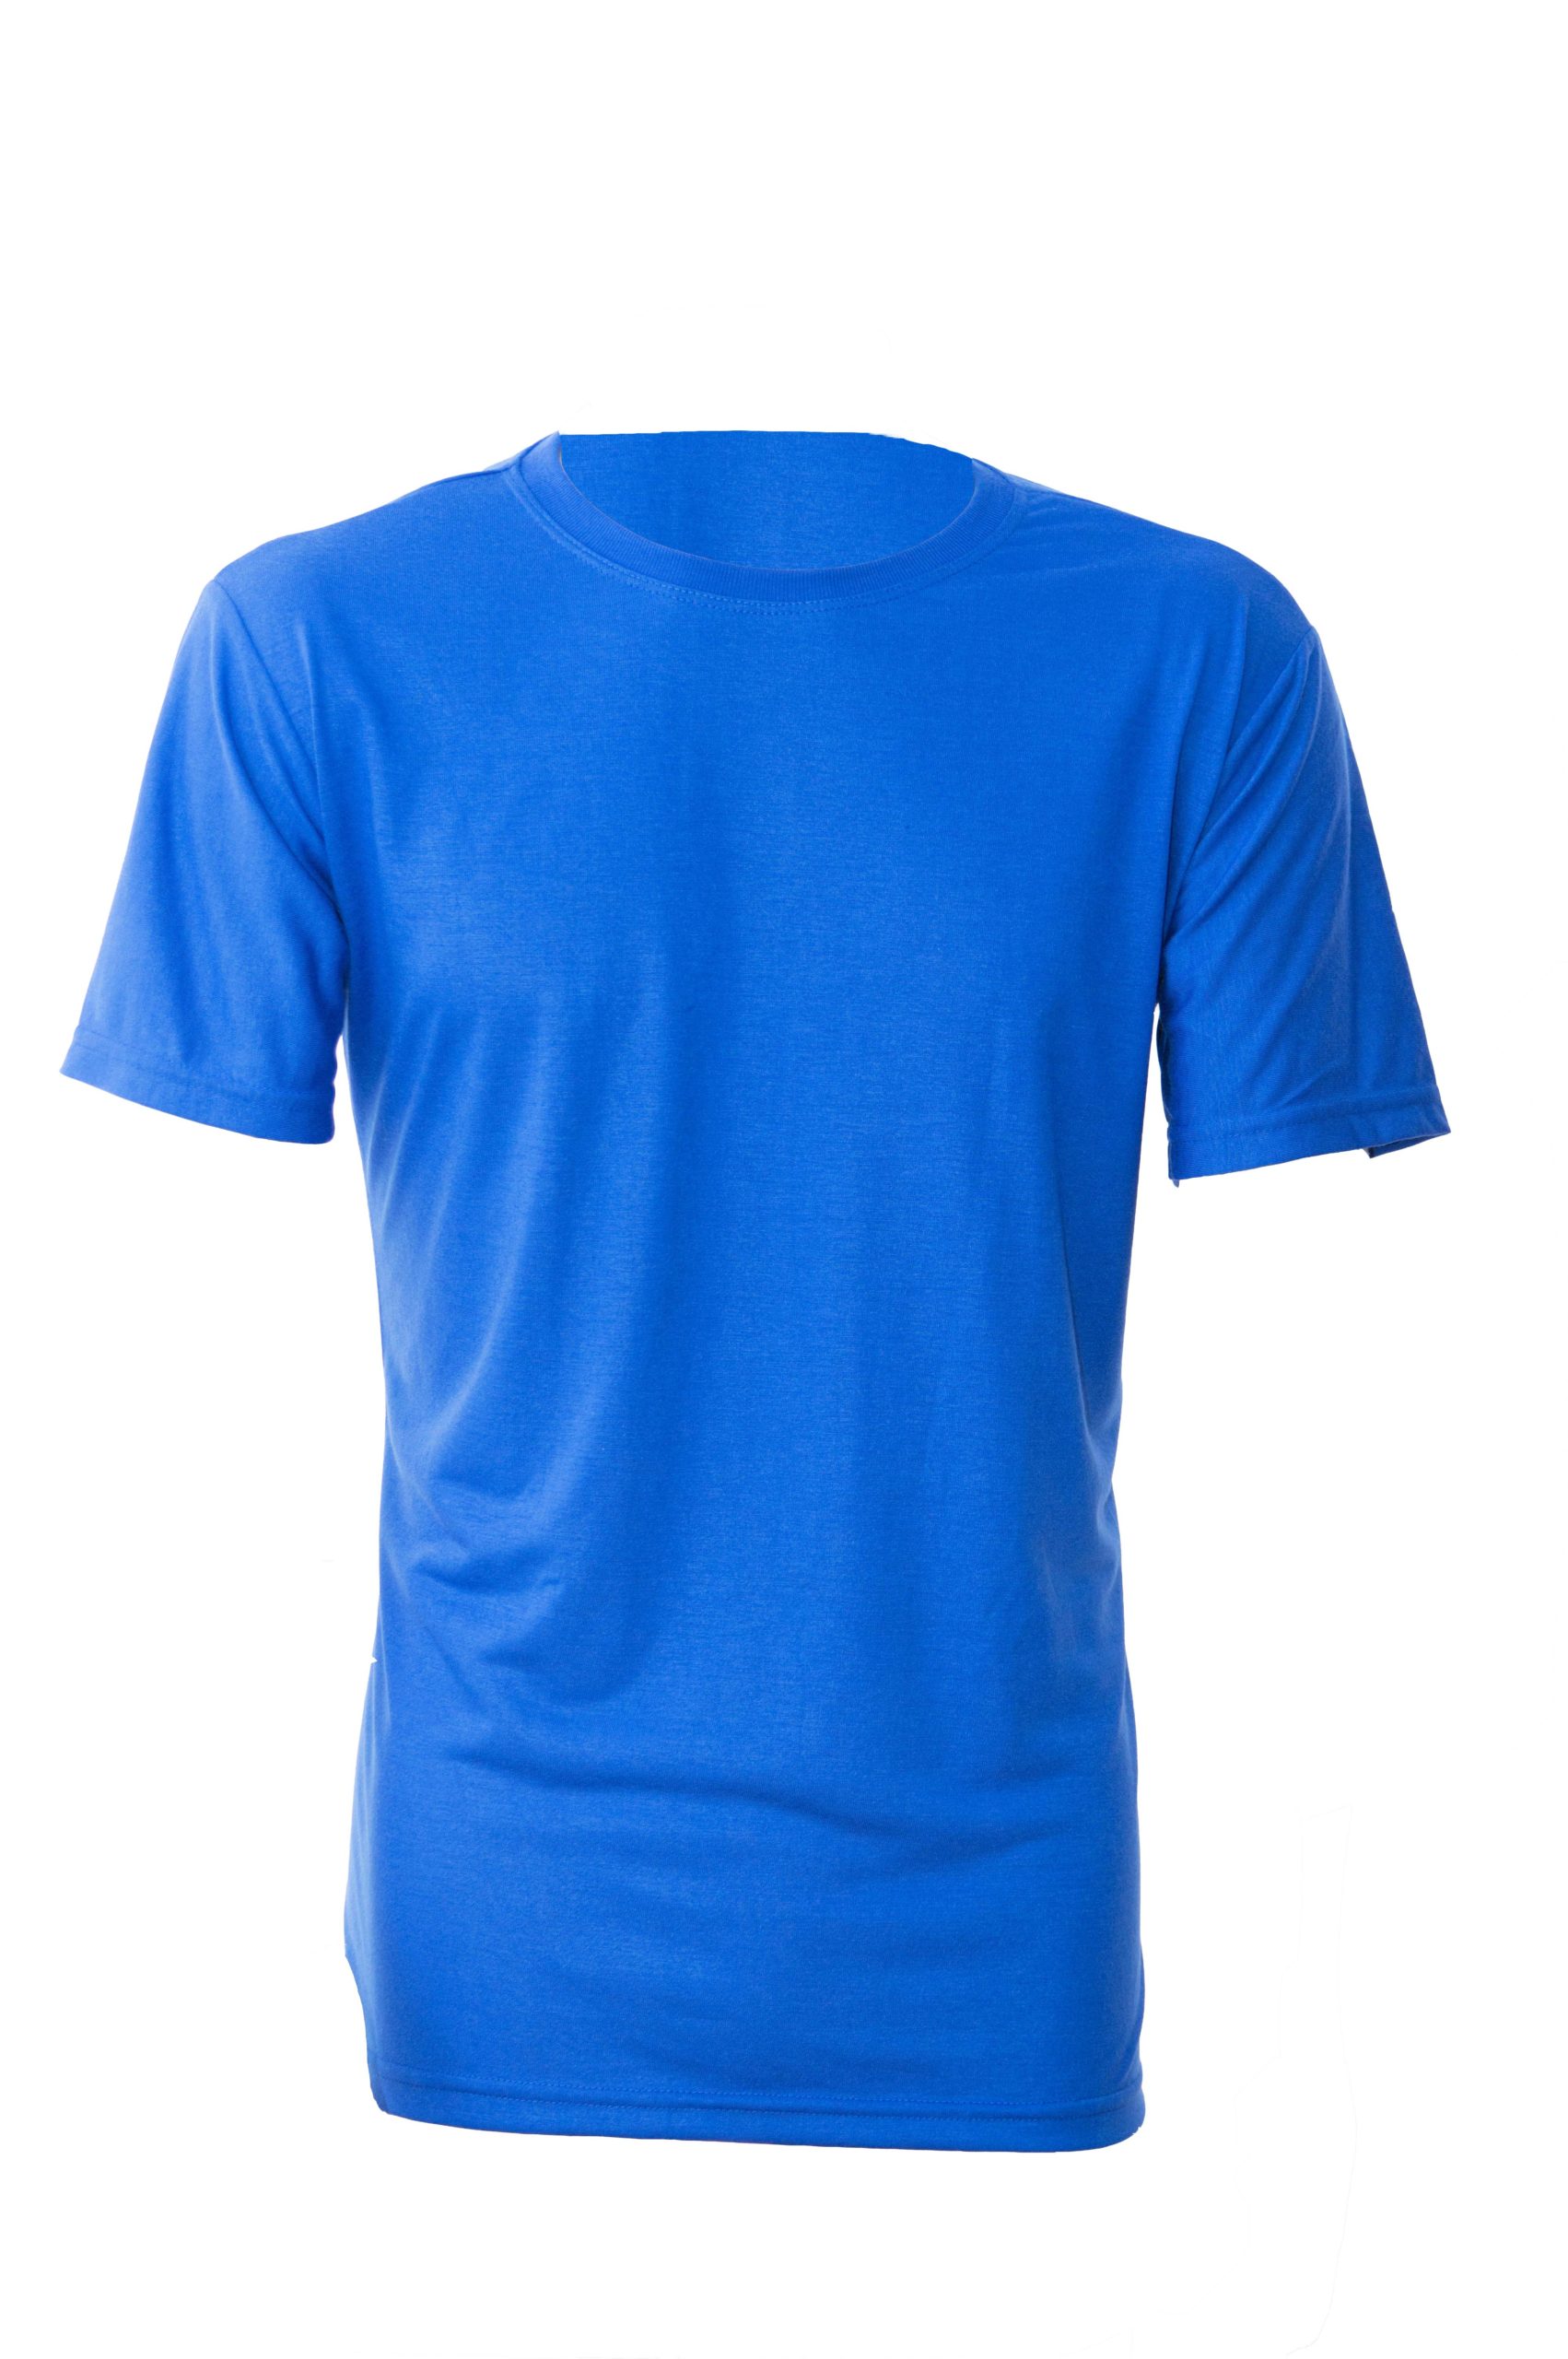 Camiseta pv manga curta azul royal TERCEIROS